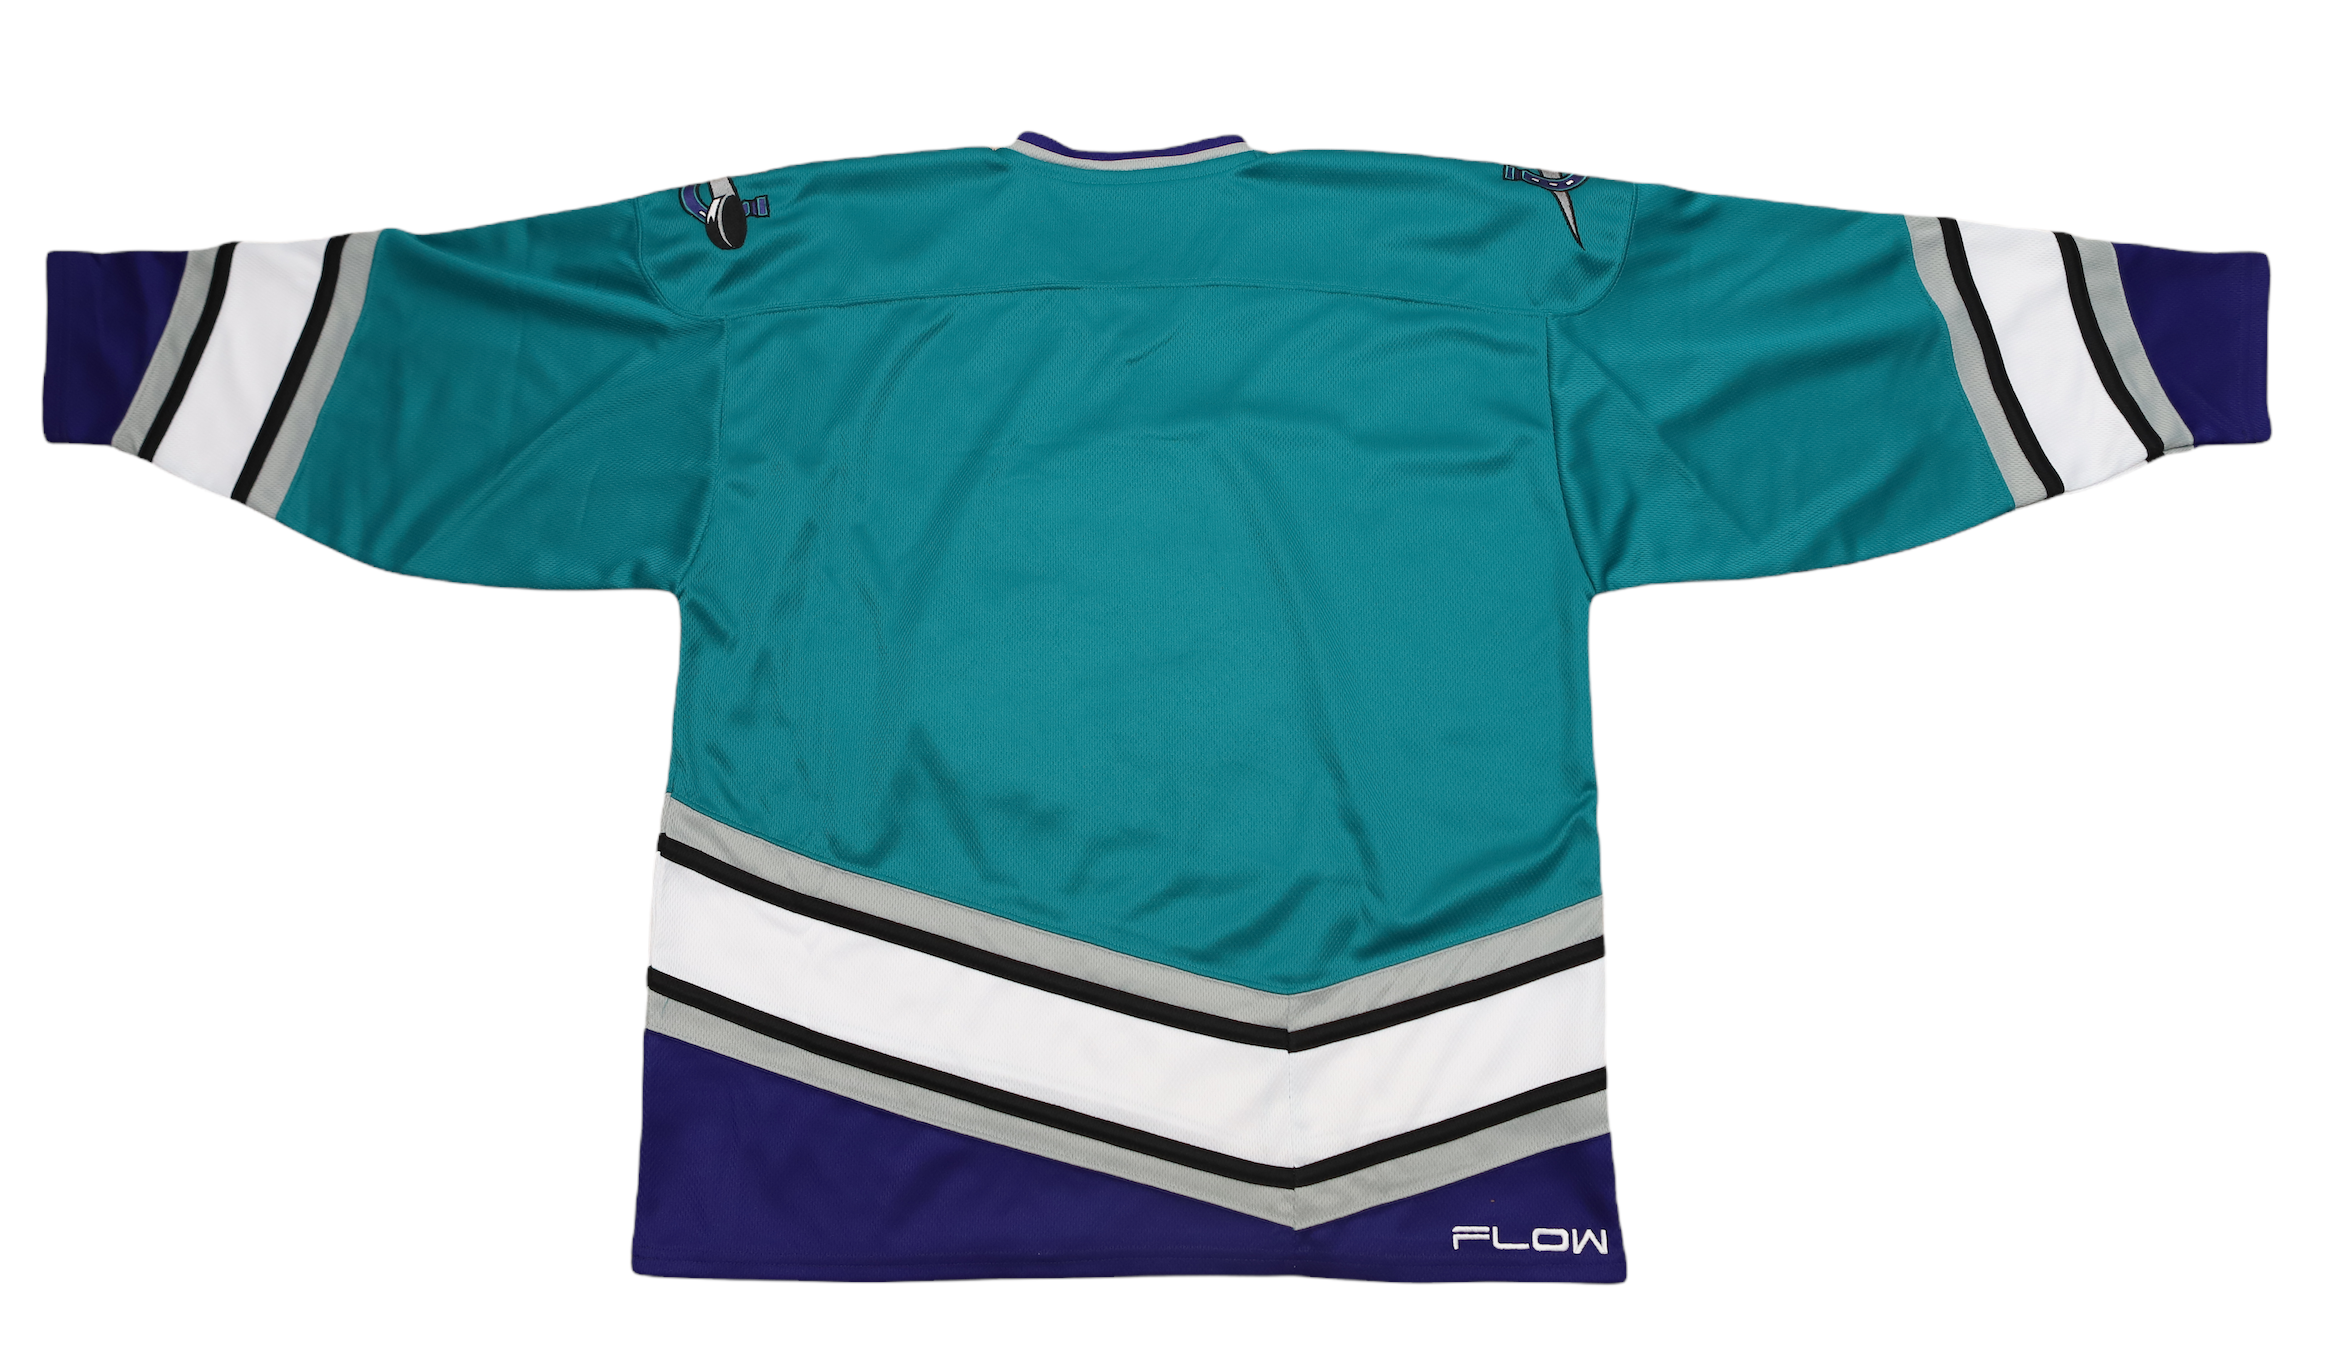 Blackhawks soccer-style retro jersey giveaway